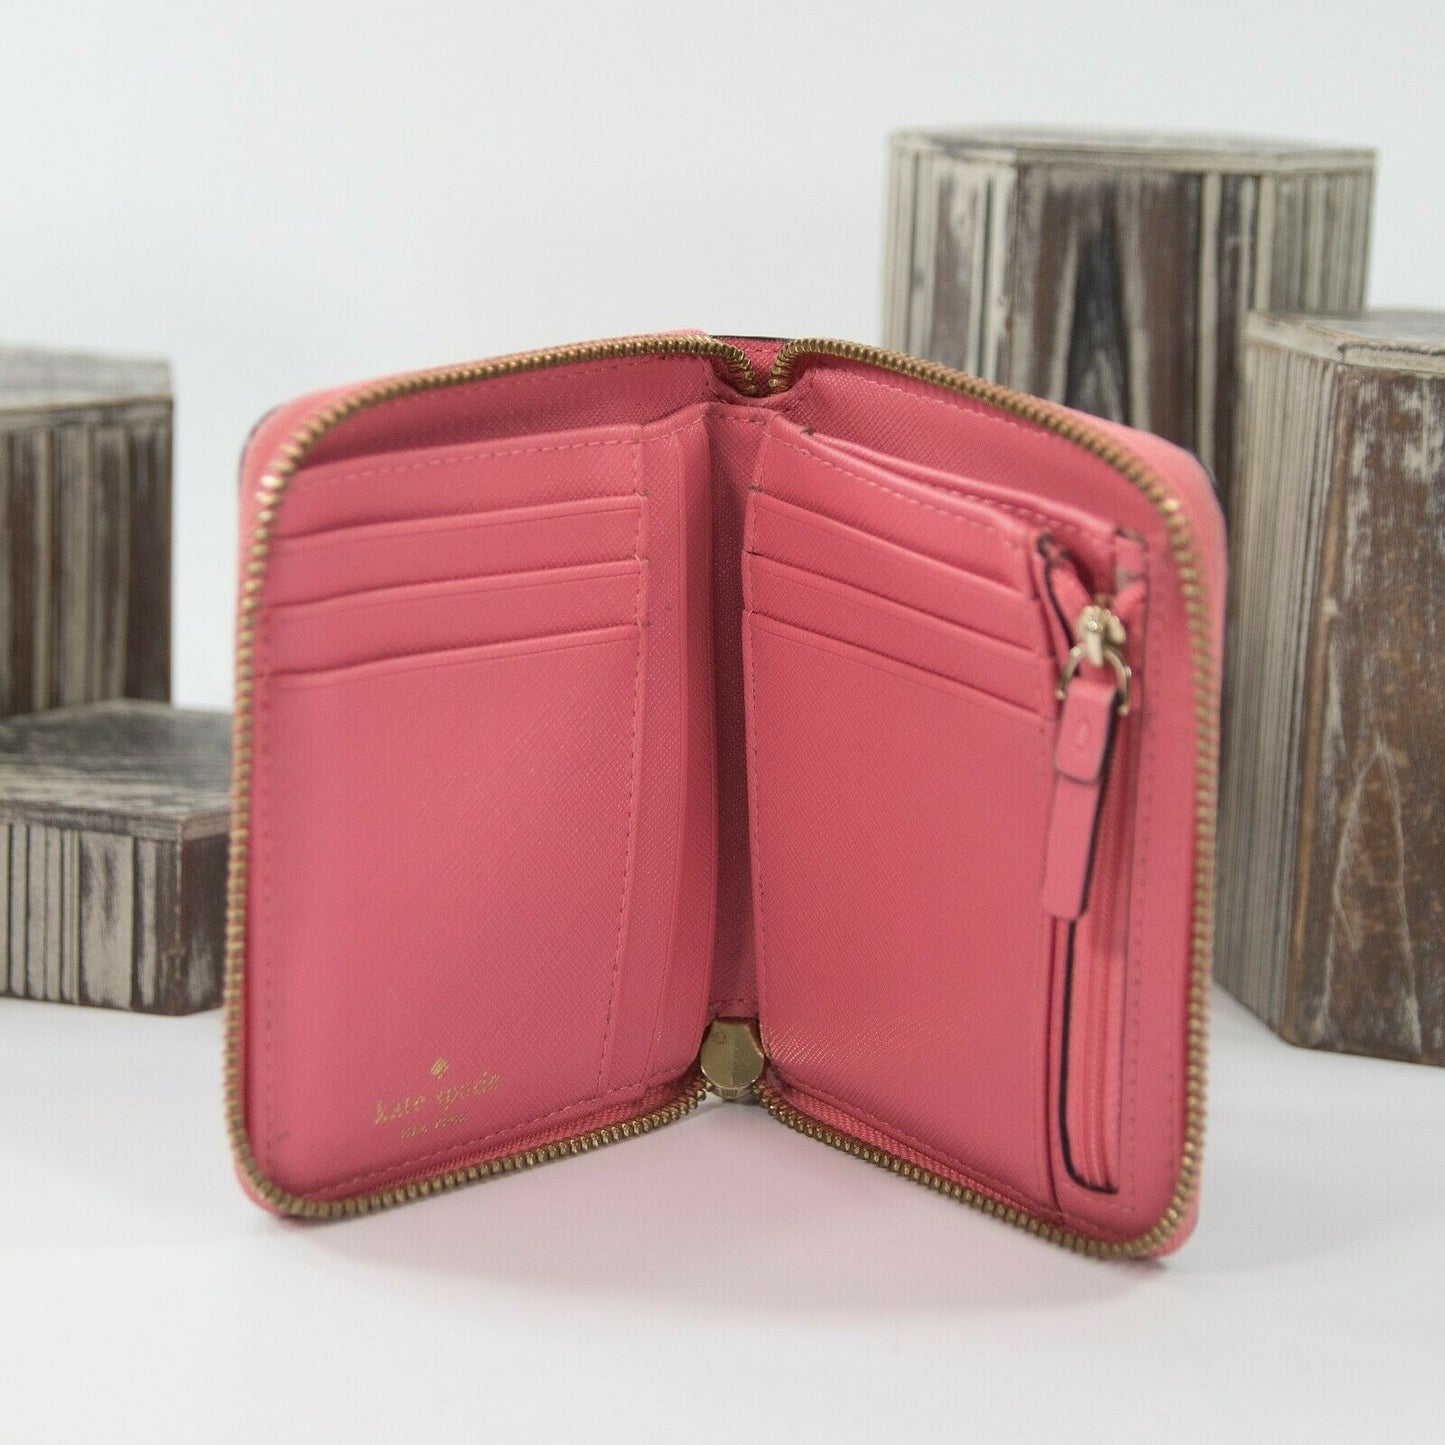 Kate Spade Newbury Lane Salmon Pink Saffiano Leather Zip Around Compact Wallet